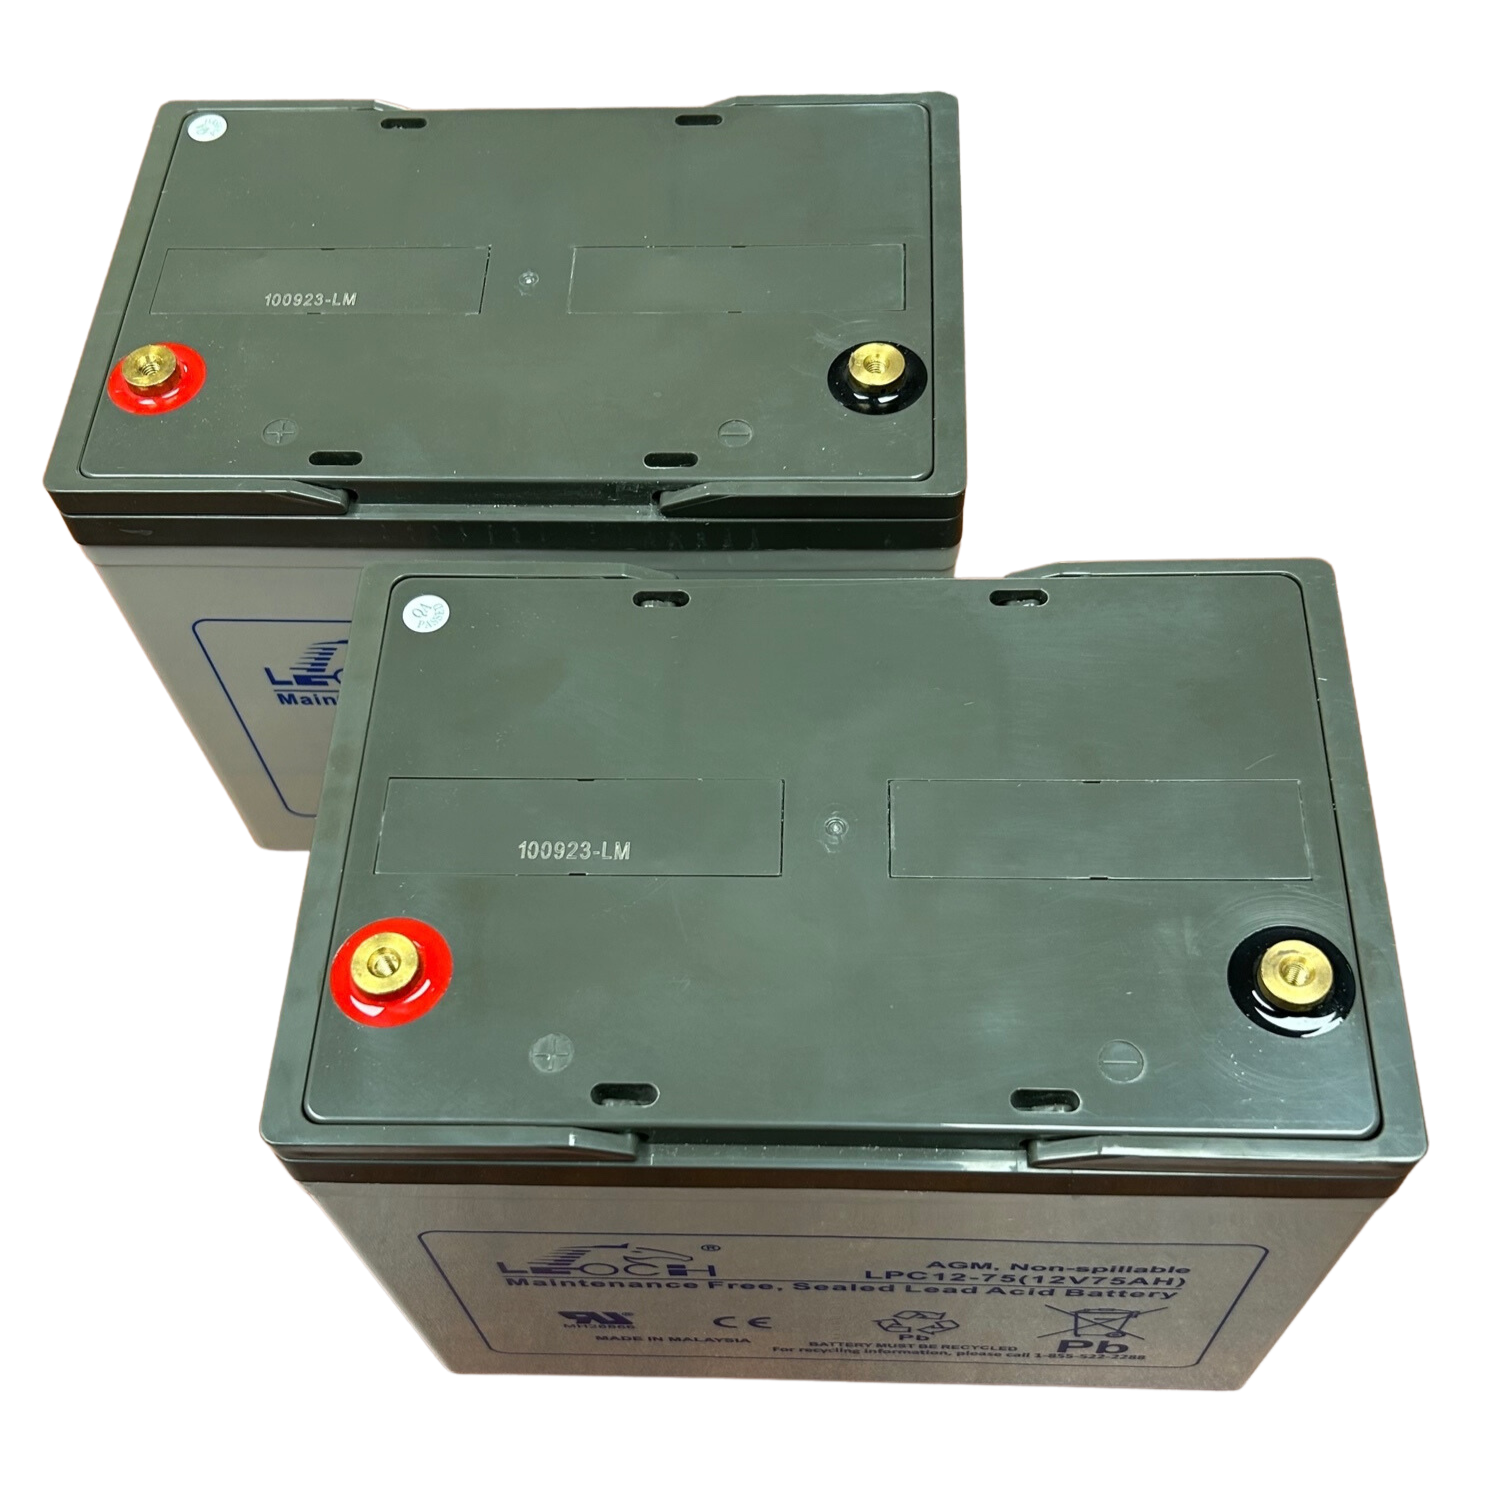 AFIKIM Breeze 4 Battery Replacement Kit Questions & Answers